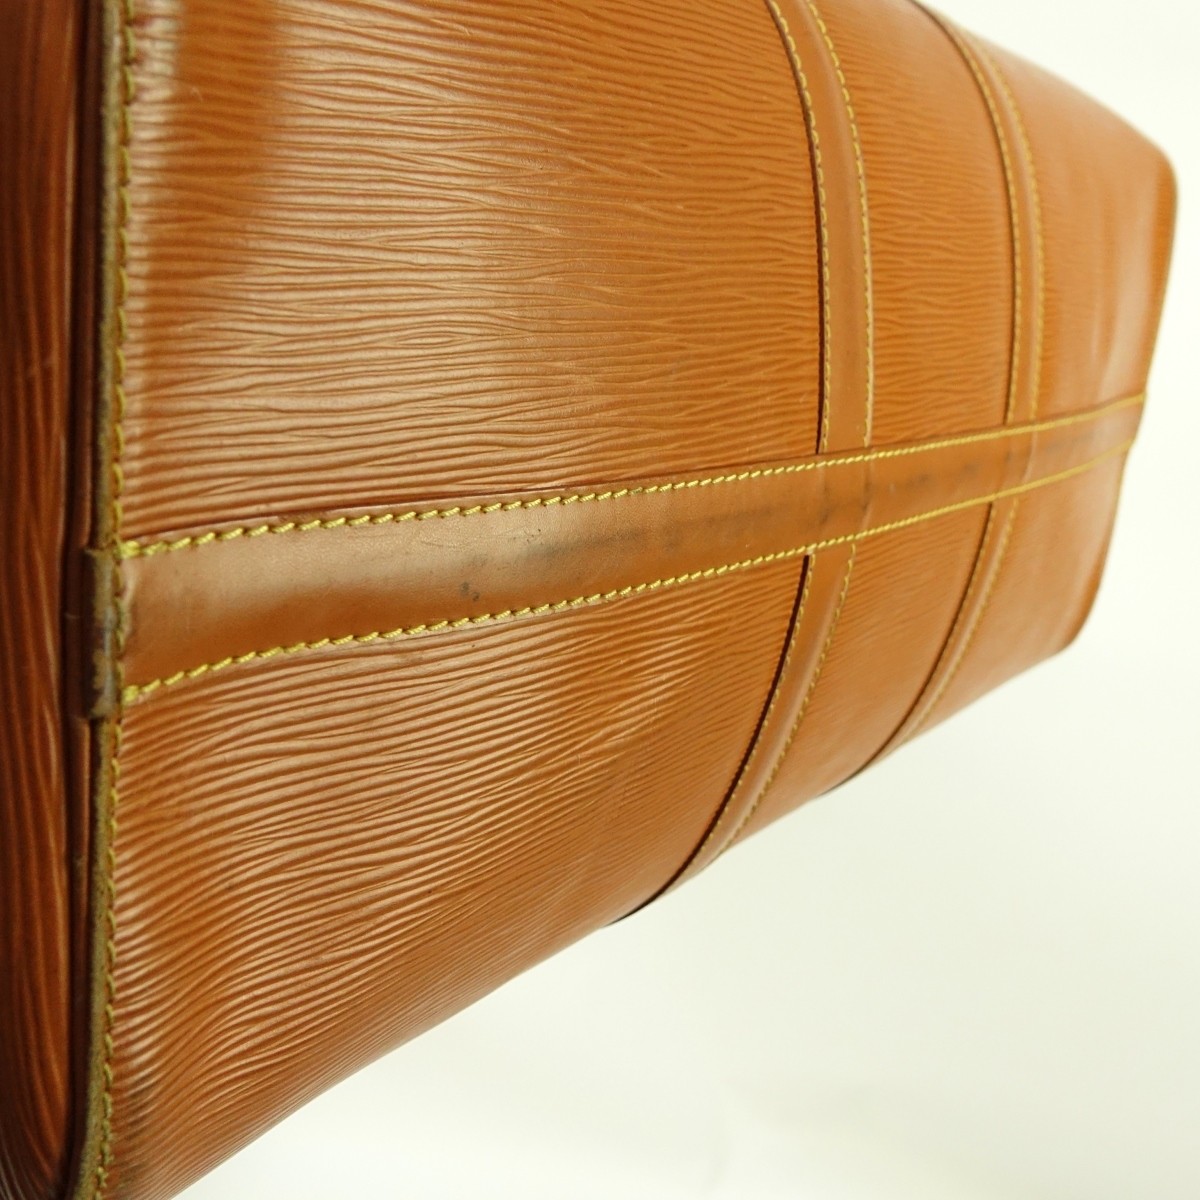 Louis Vuitton Gold Epi Leather Keepall 45 Bag